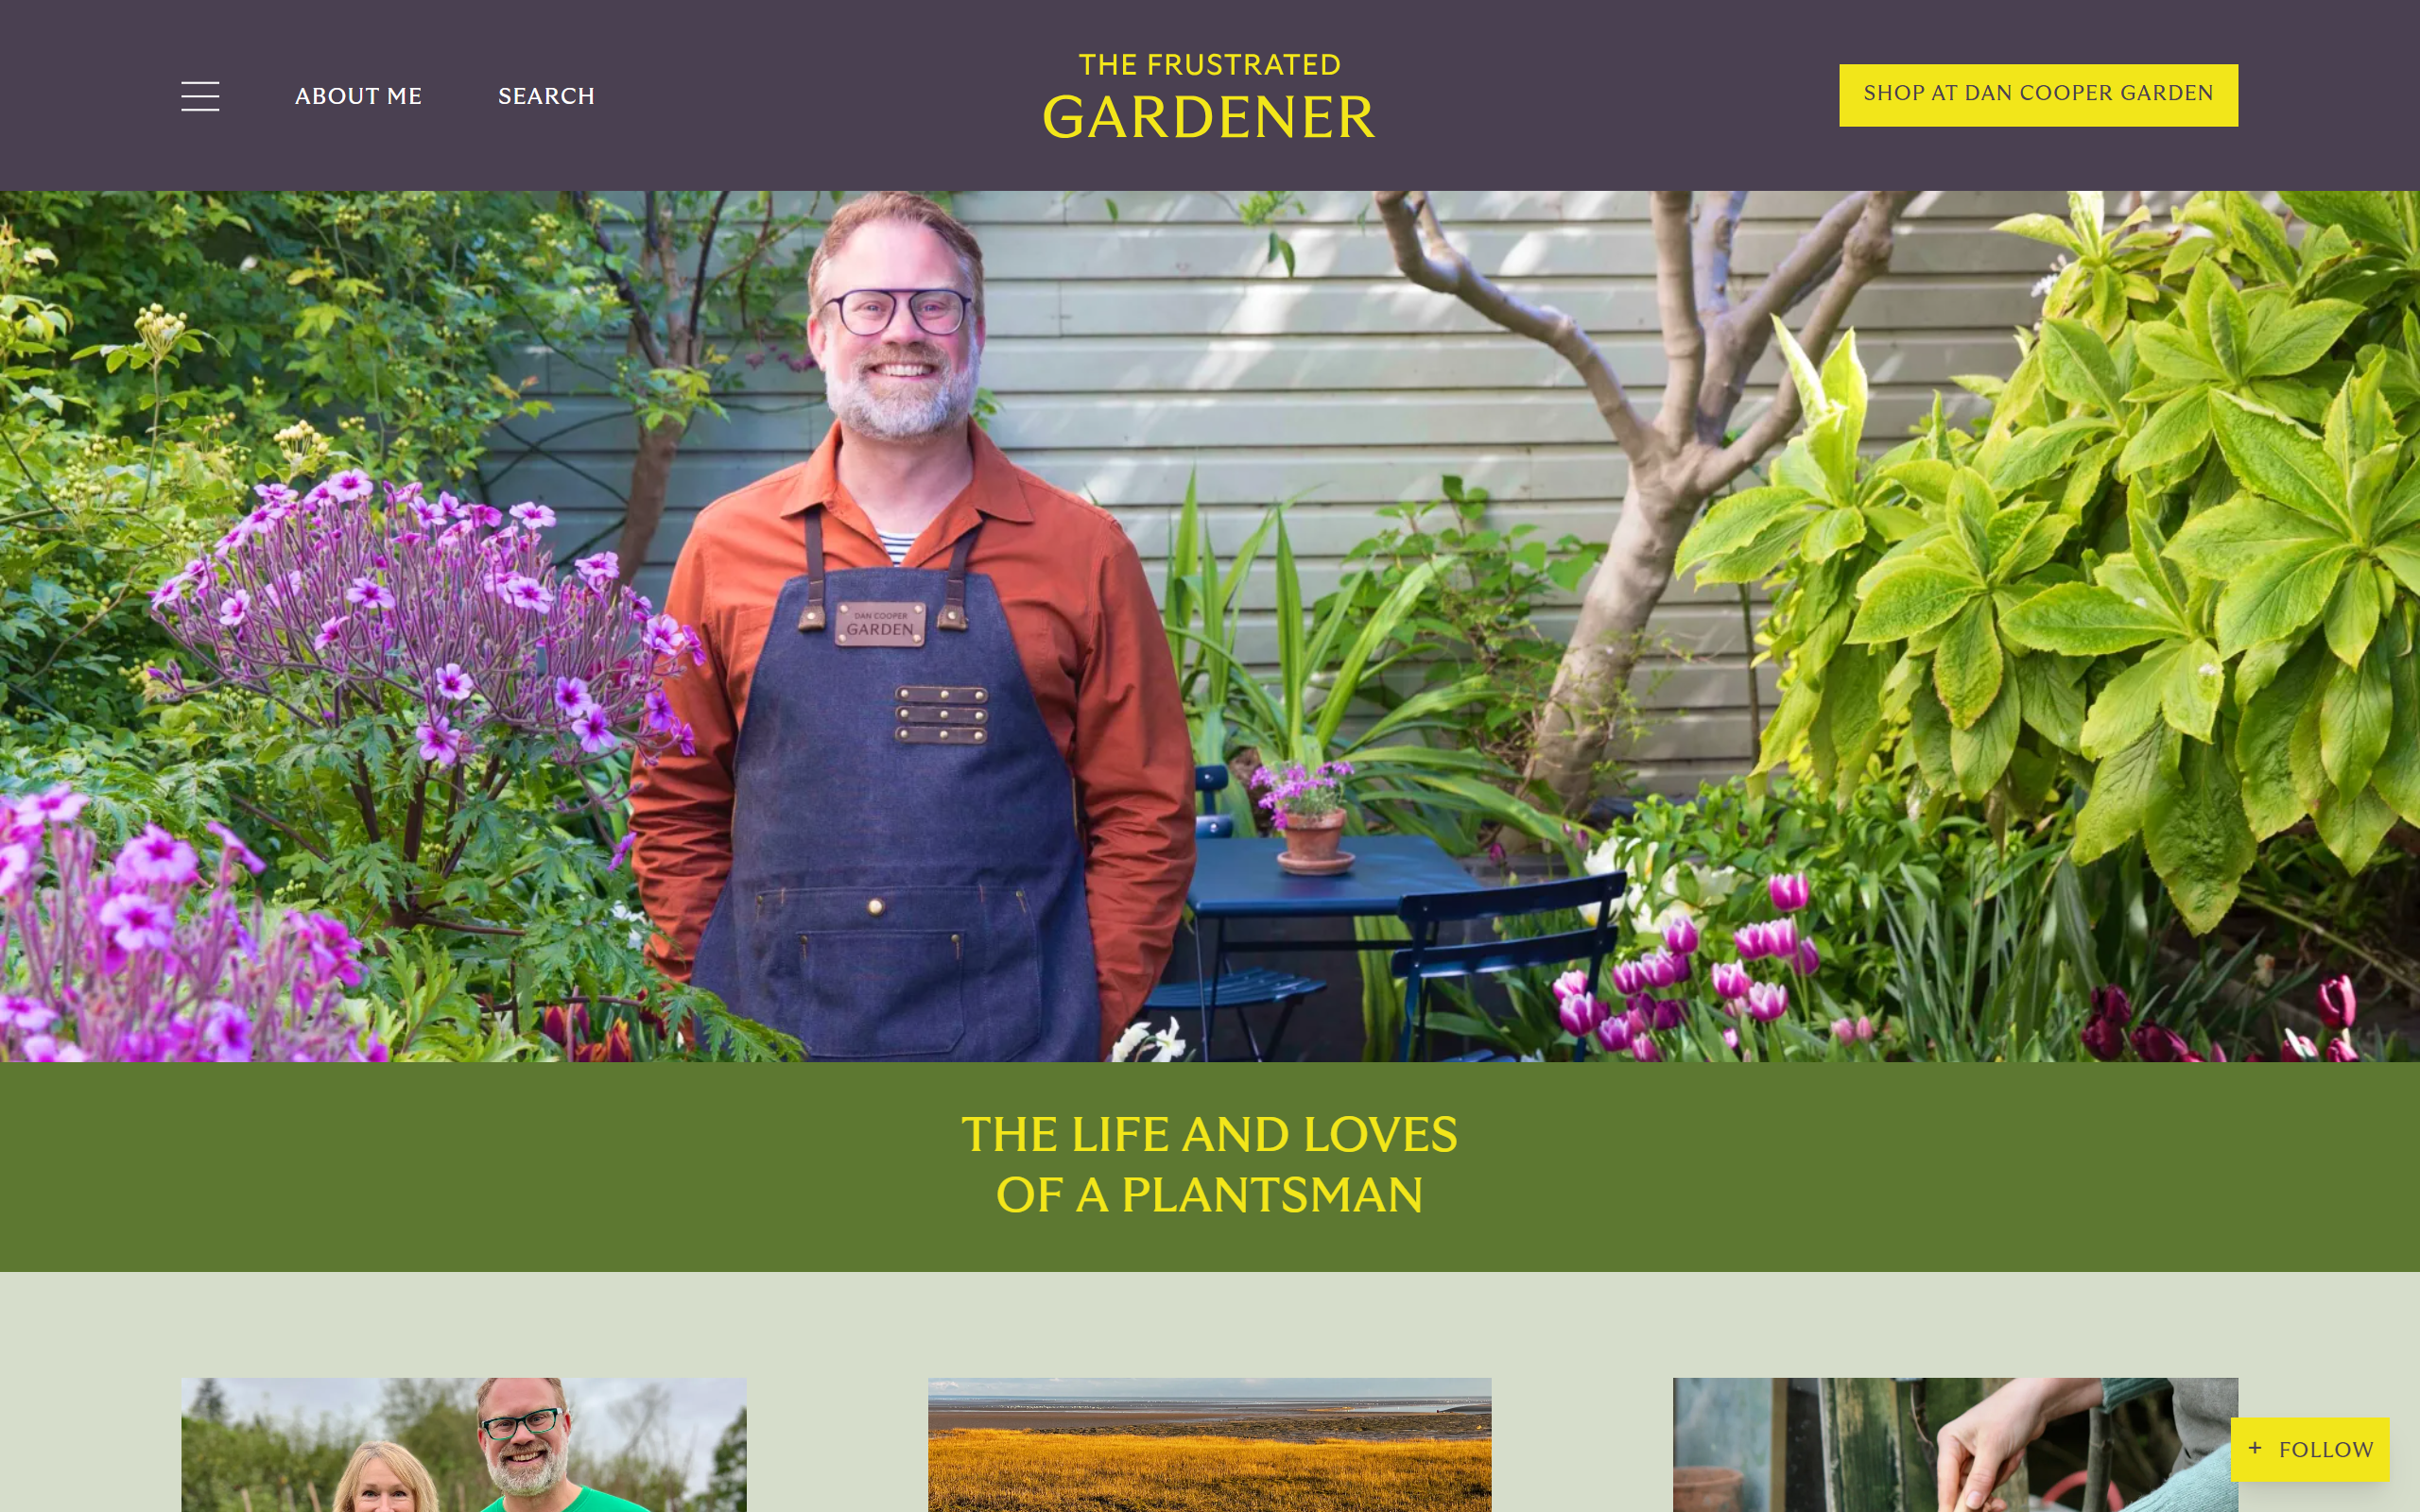 The Frustrated Gardener gardening blog